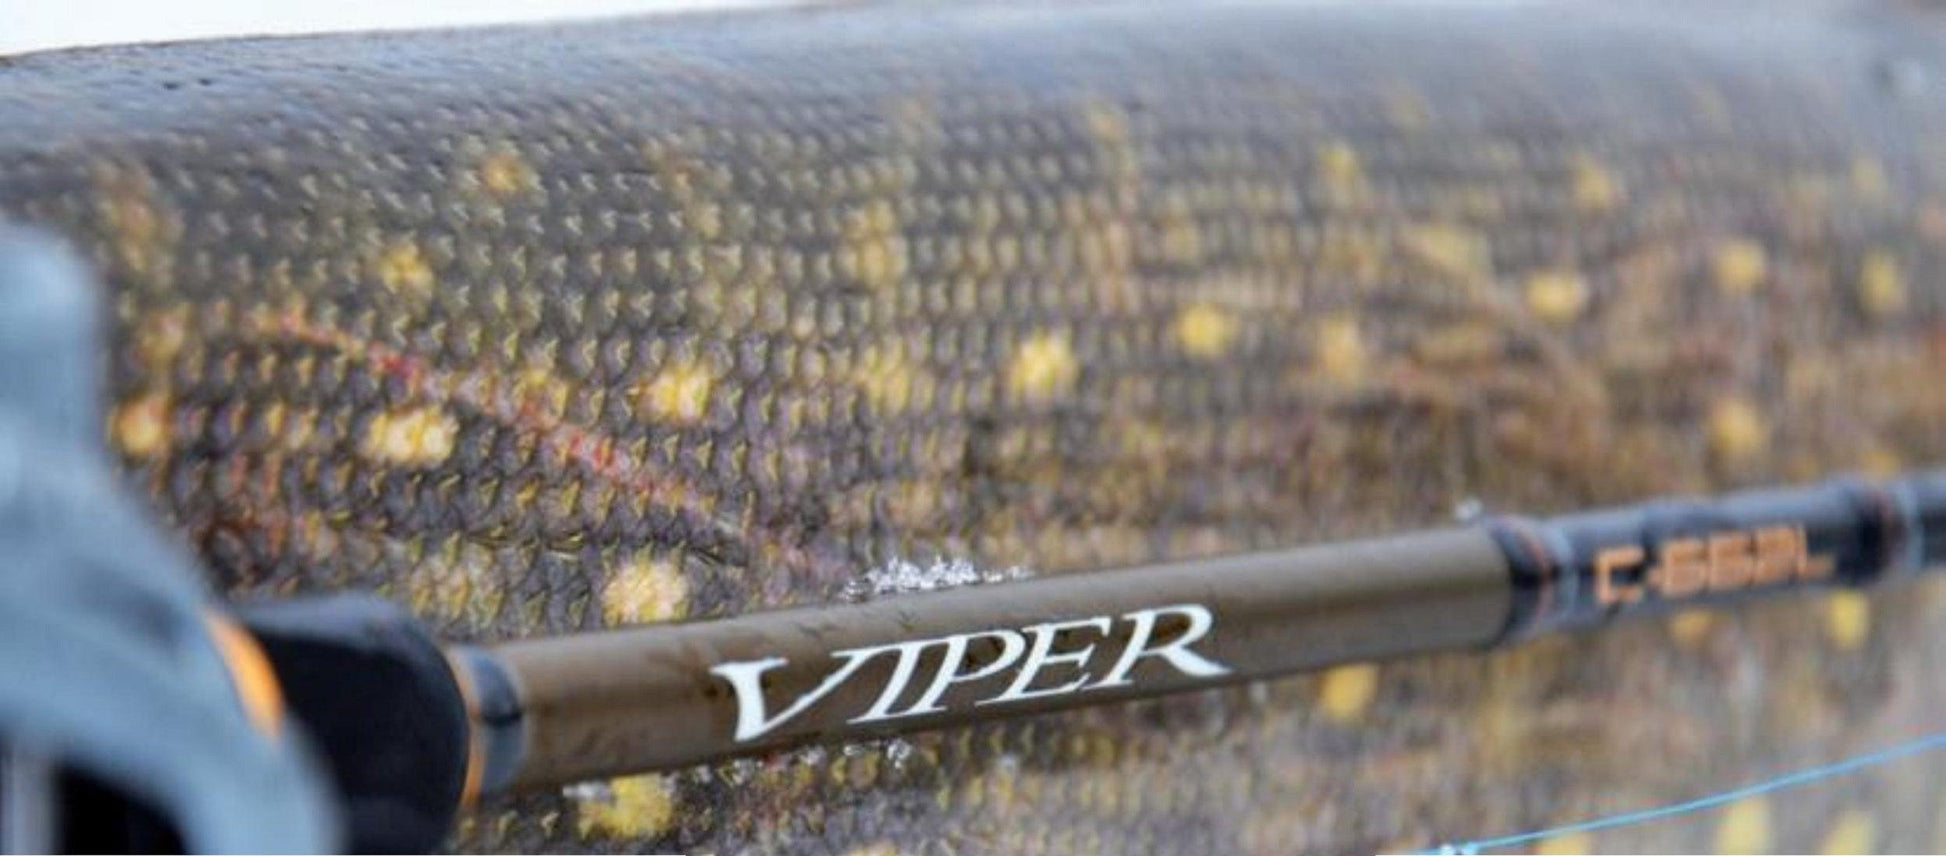 ZEMEX Viper - SP-Fishing